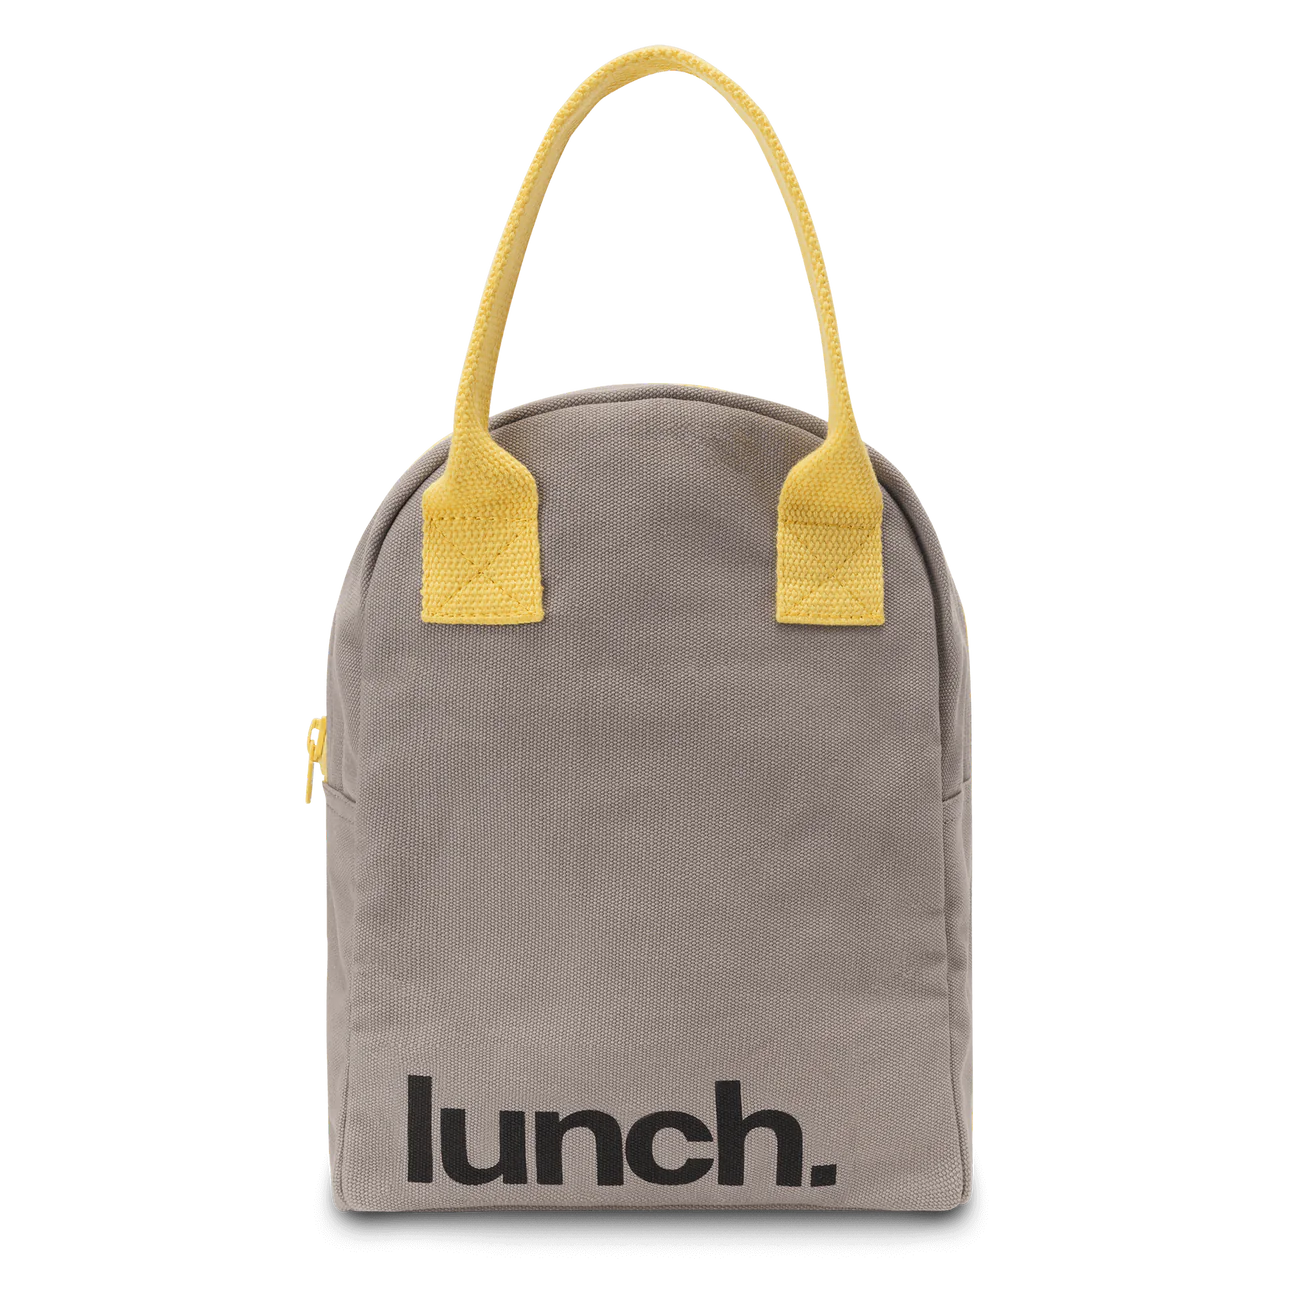 Eco Friendly Zipper Lunch Bag